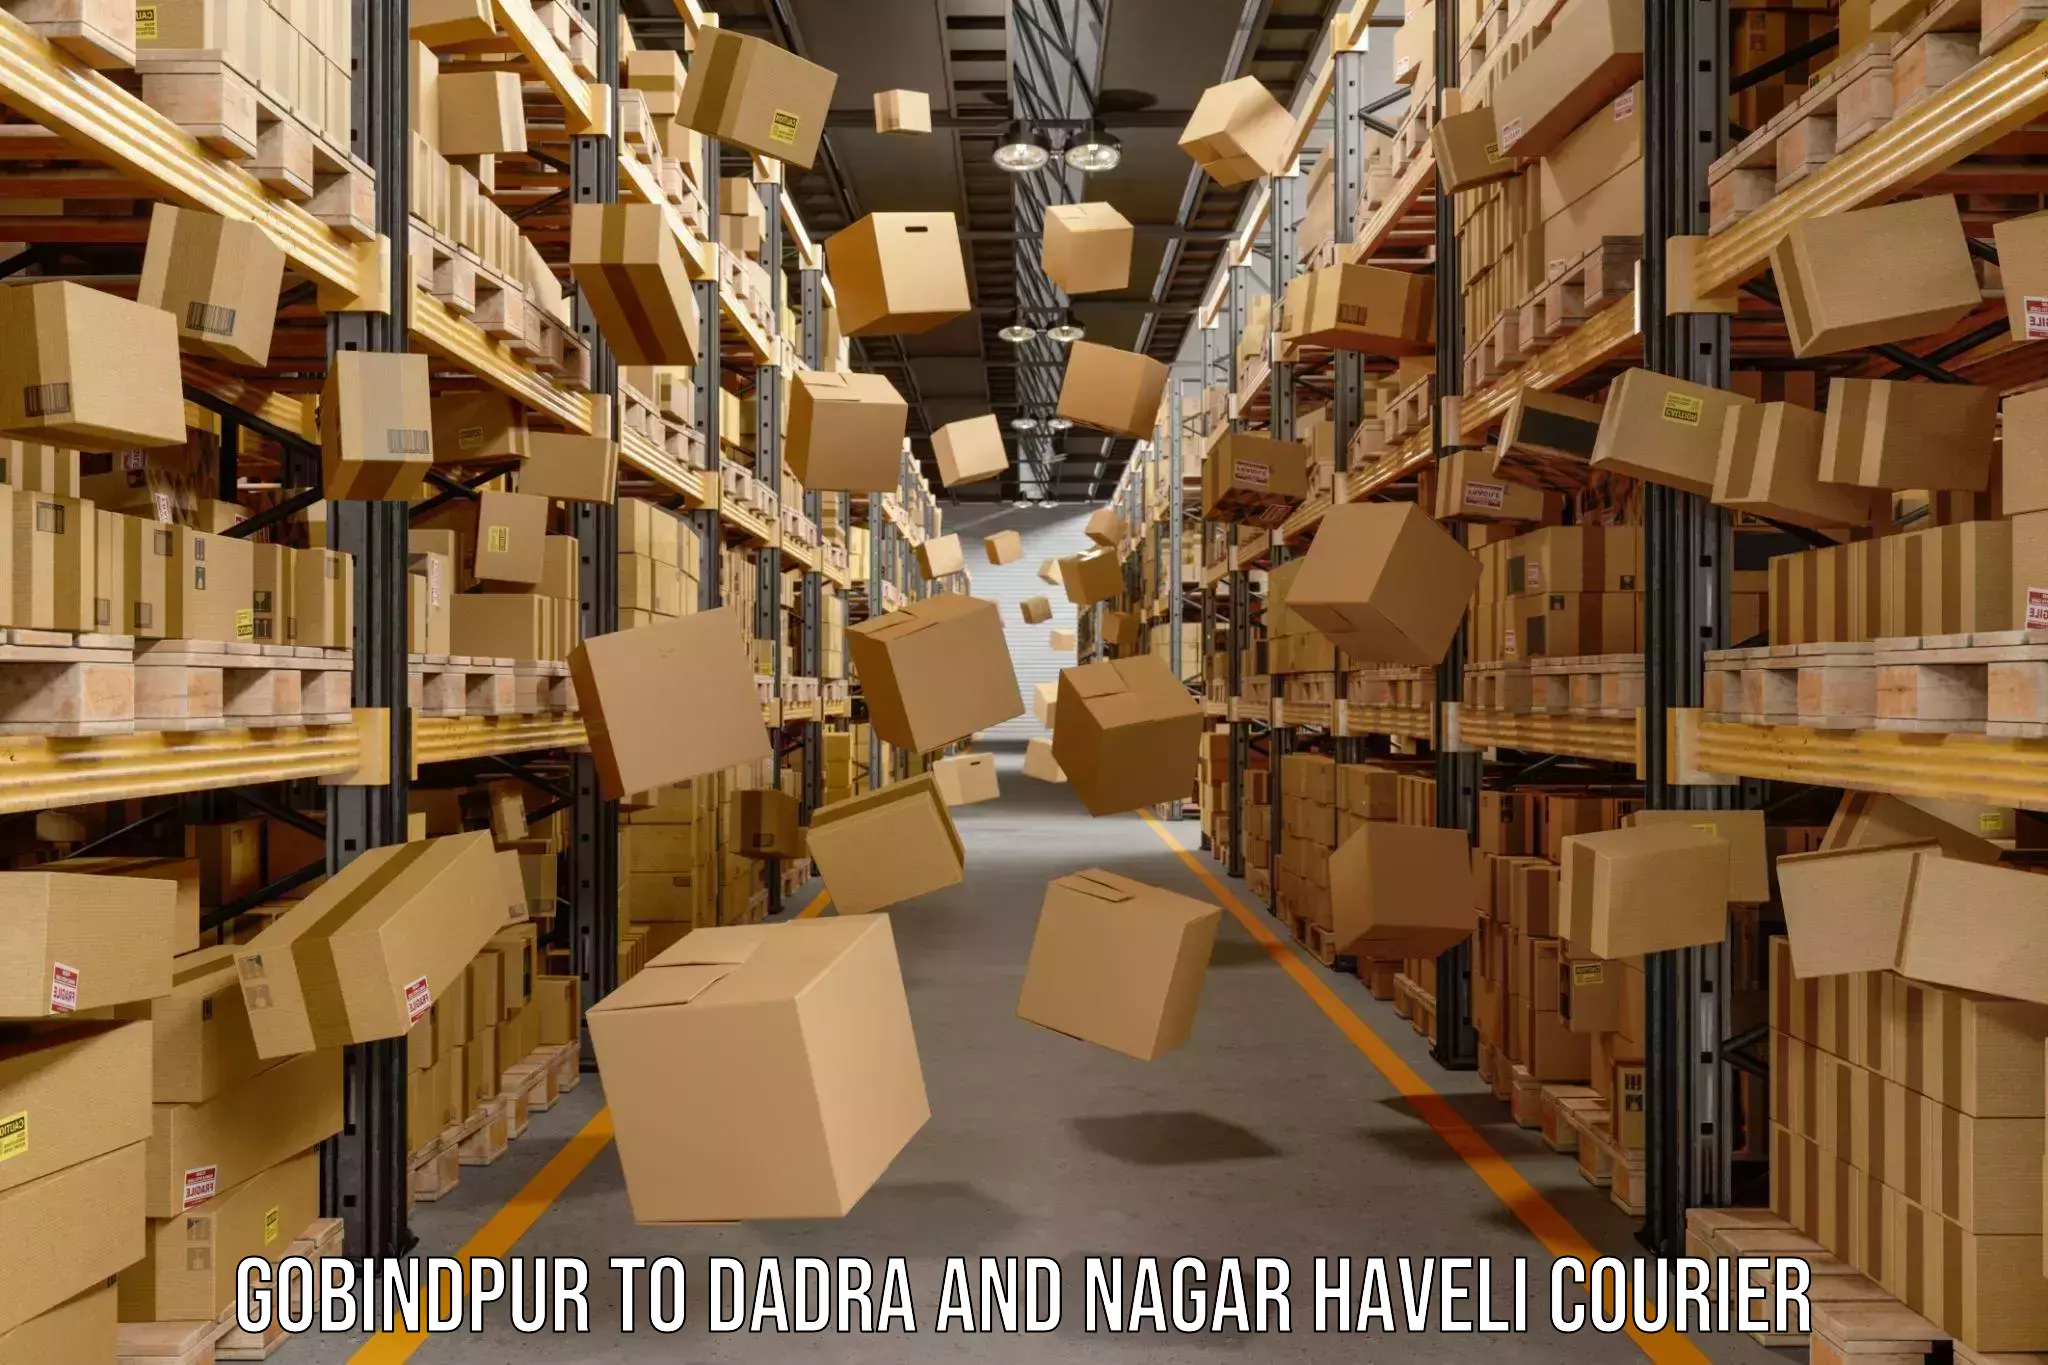 Courier service innovation Gobindpur to Dadra and Nagar Haveli